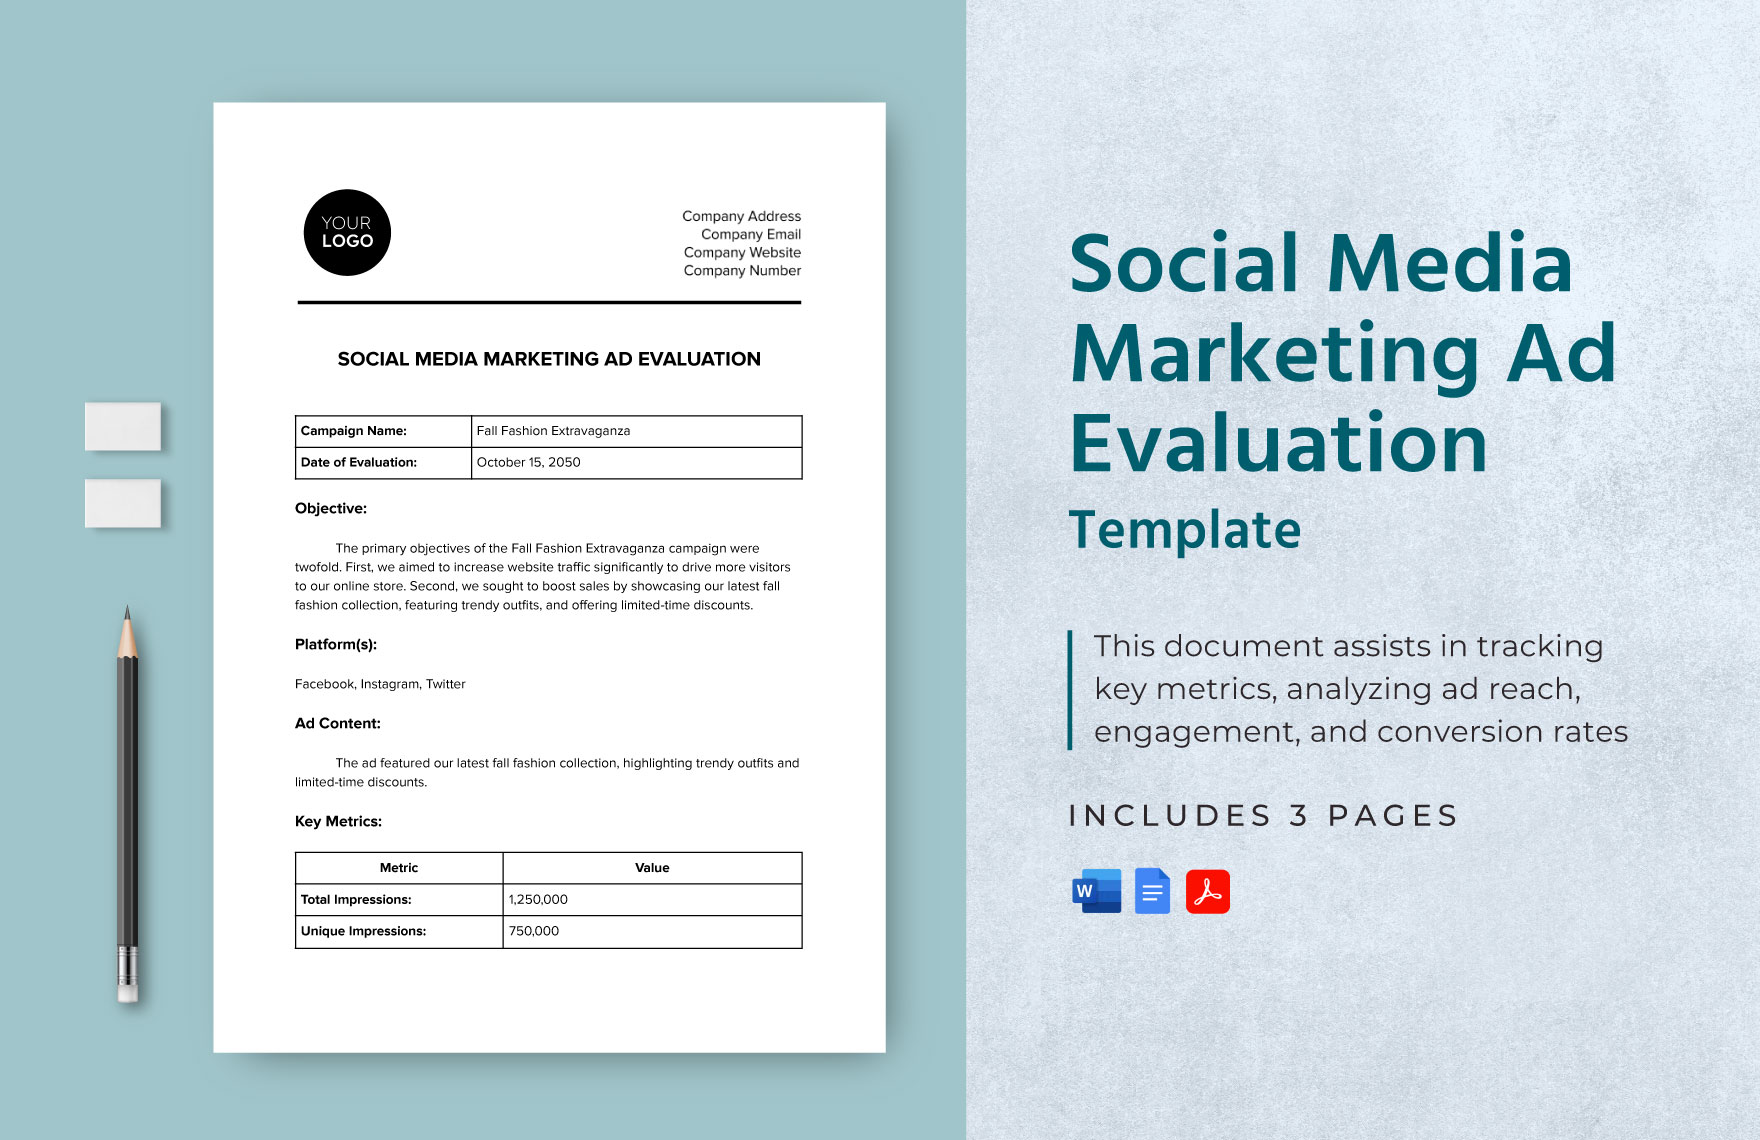 Social Media Marketing Ad Evaluation Template in Word, Google Docs, PDF